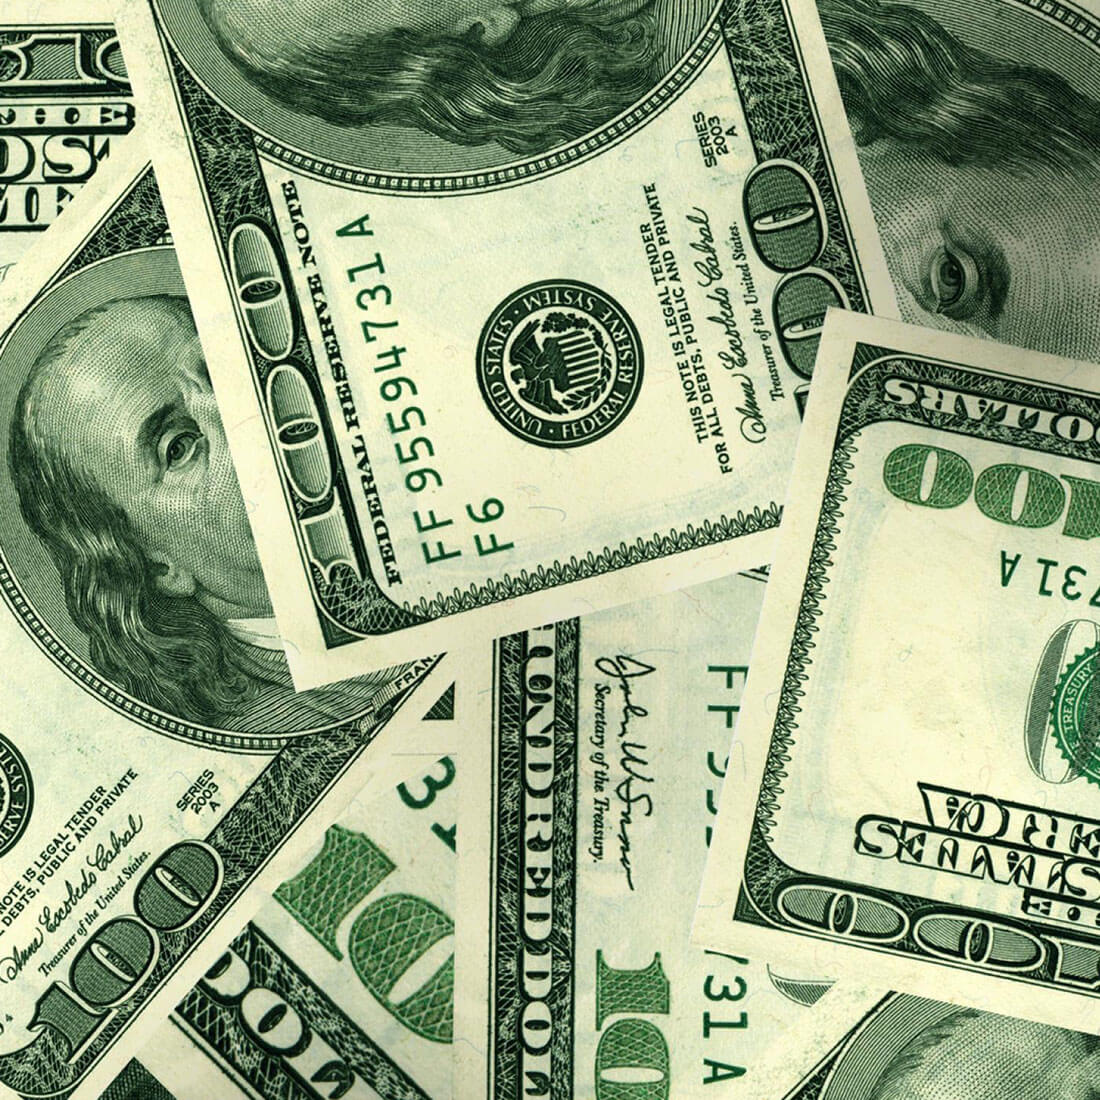 Money Images No Copyright - HD Wallpaper 